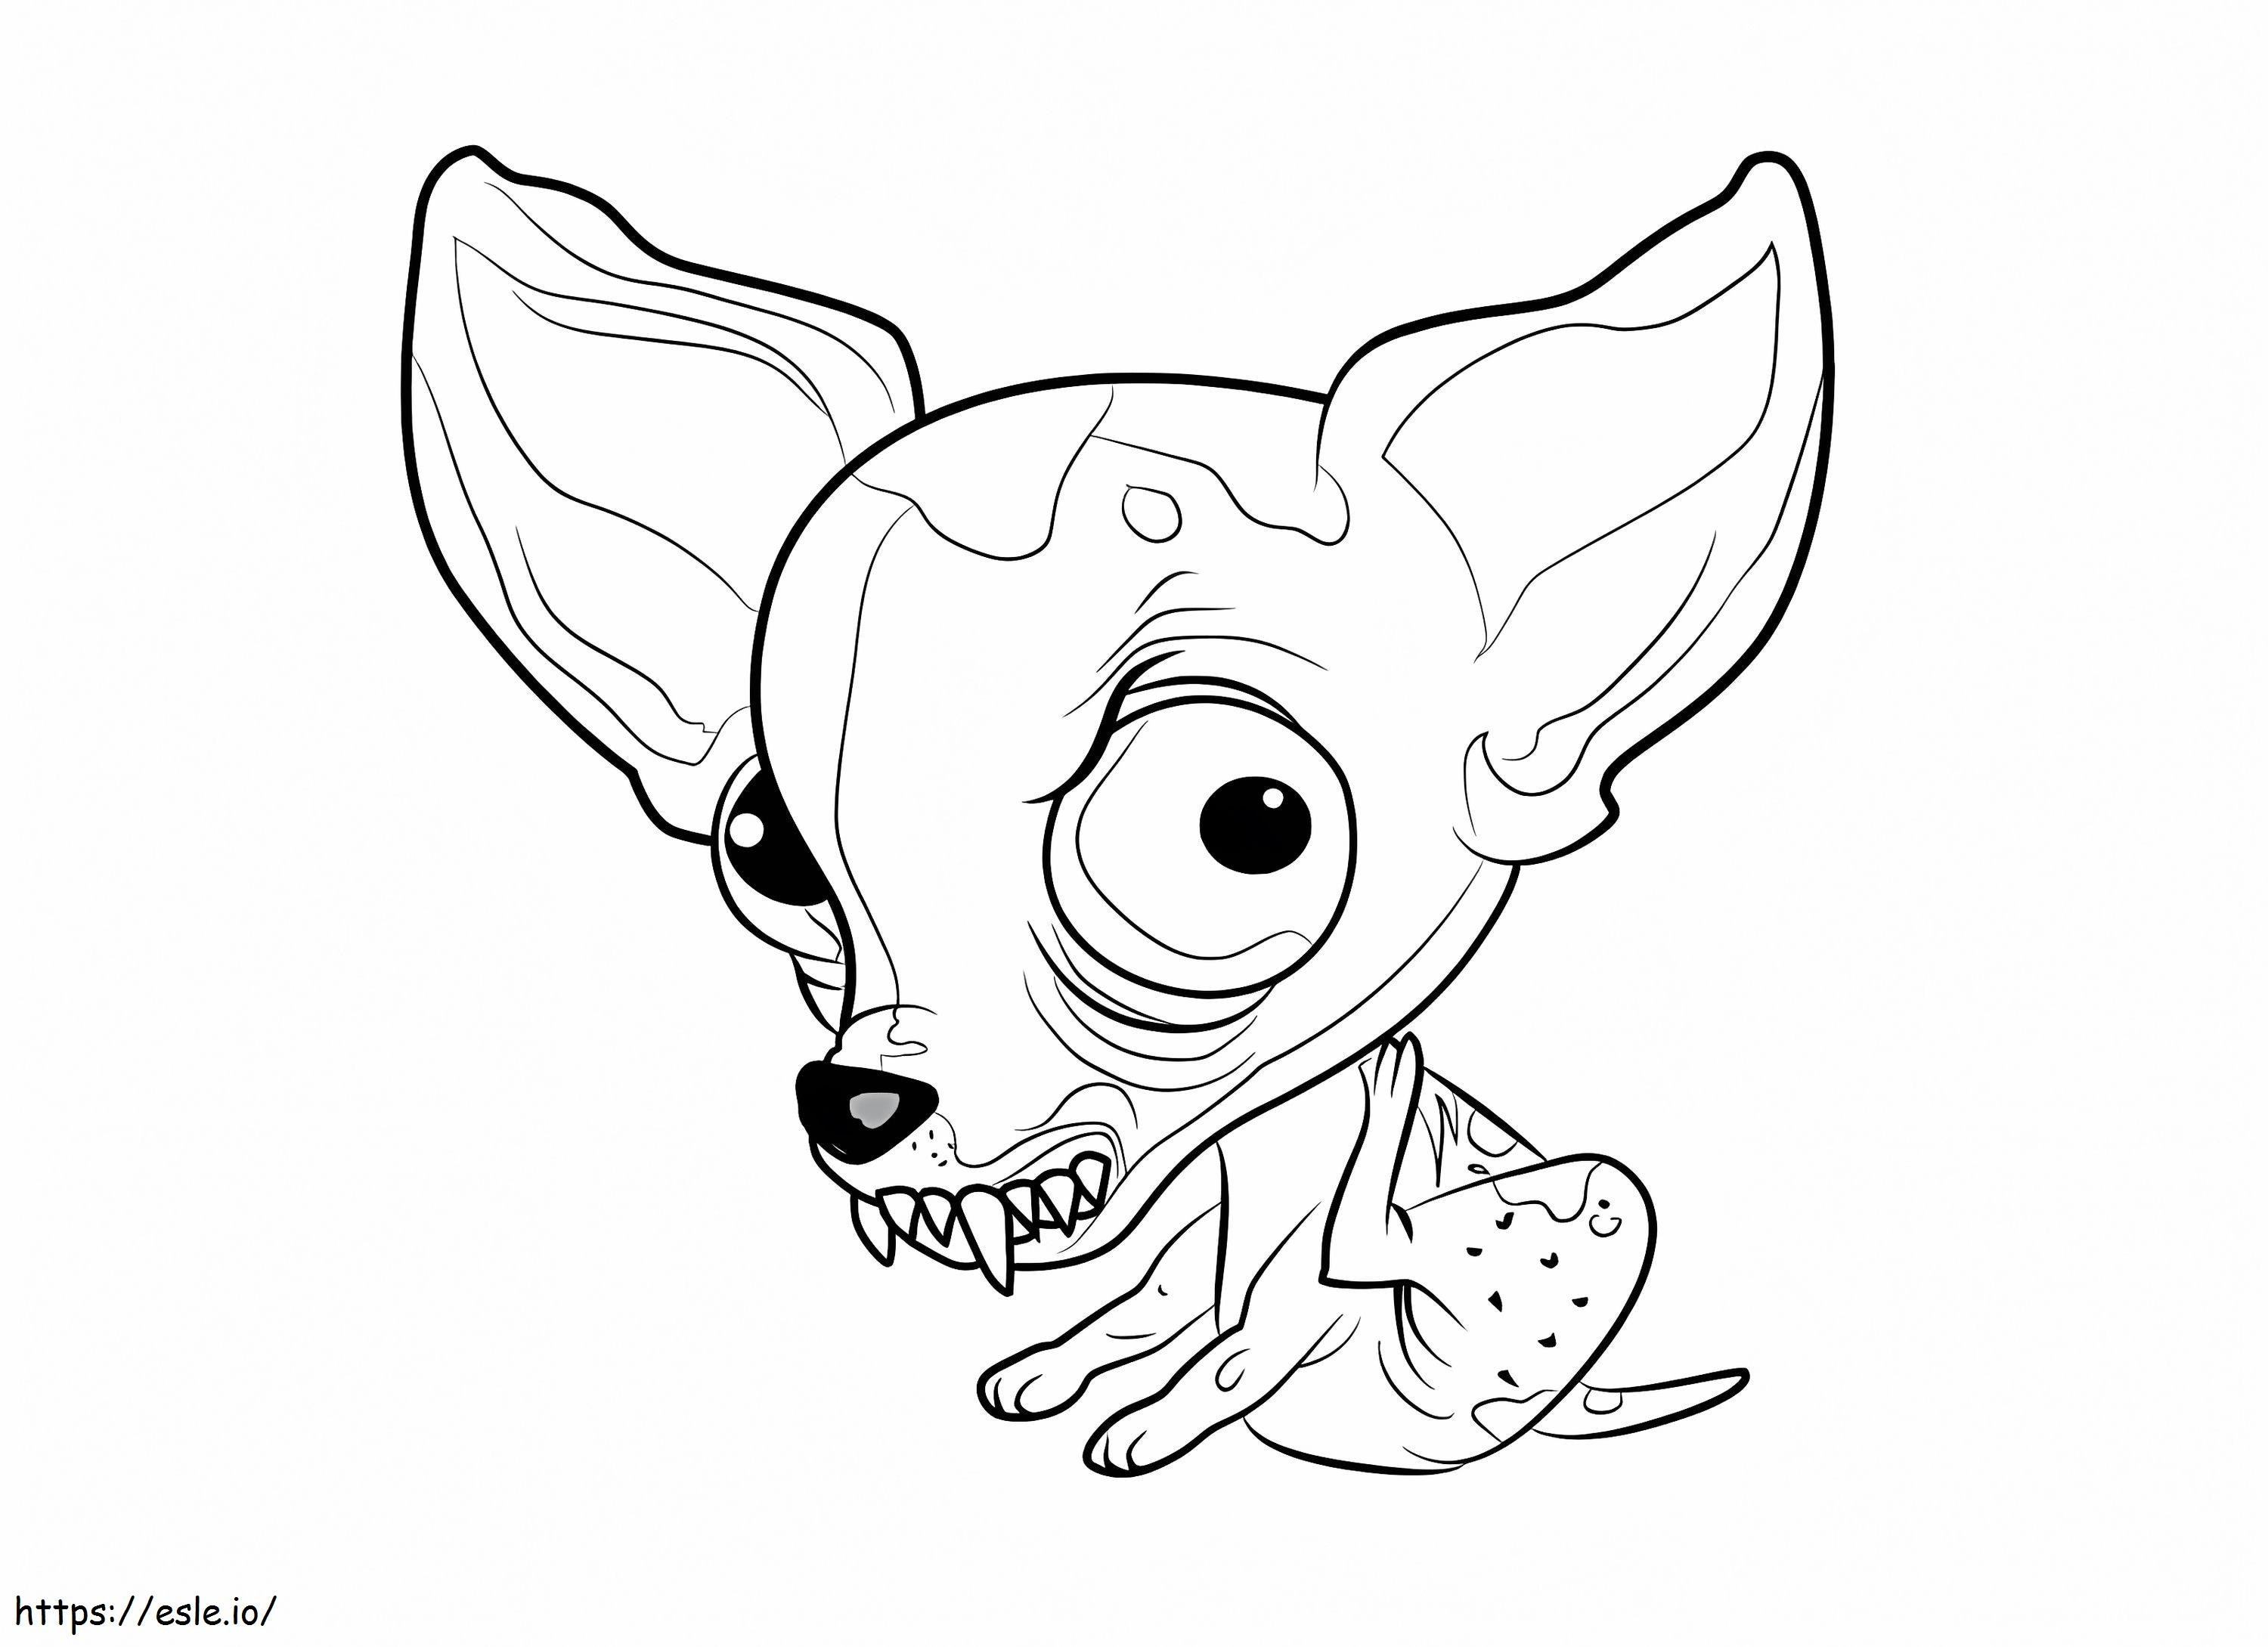 Chucky Chihuahua coloring page